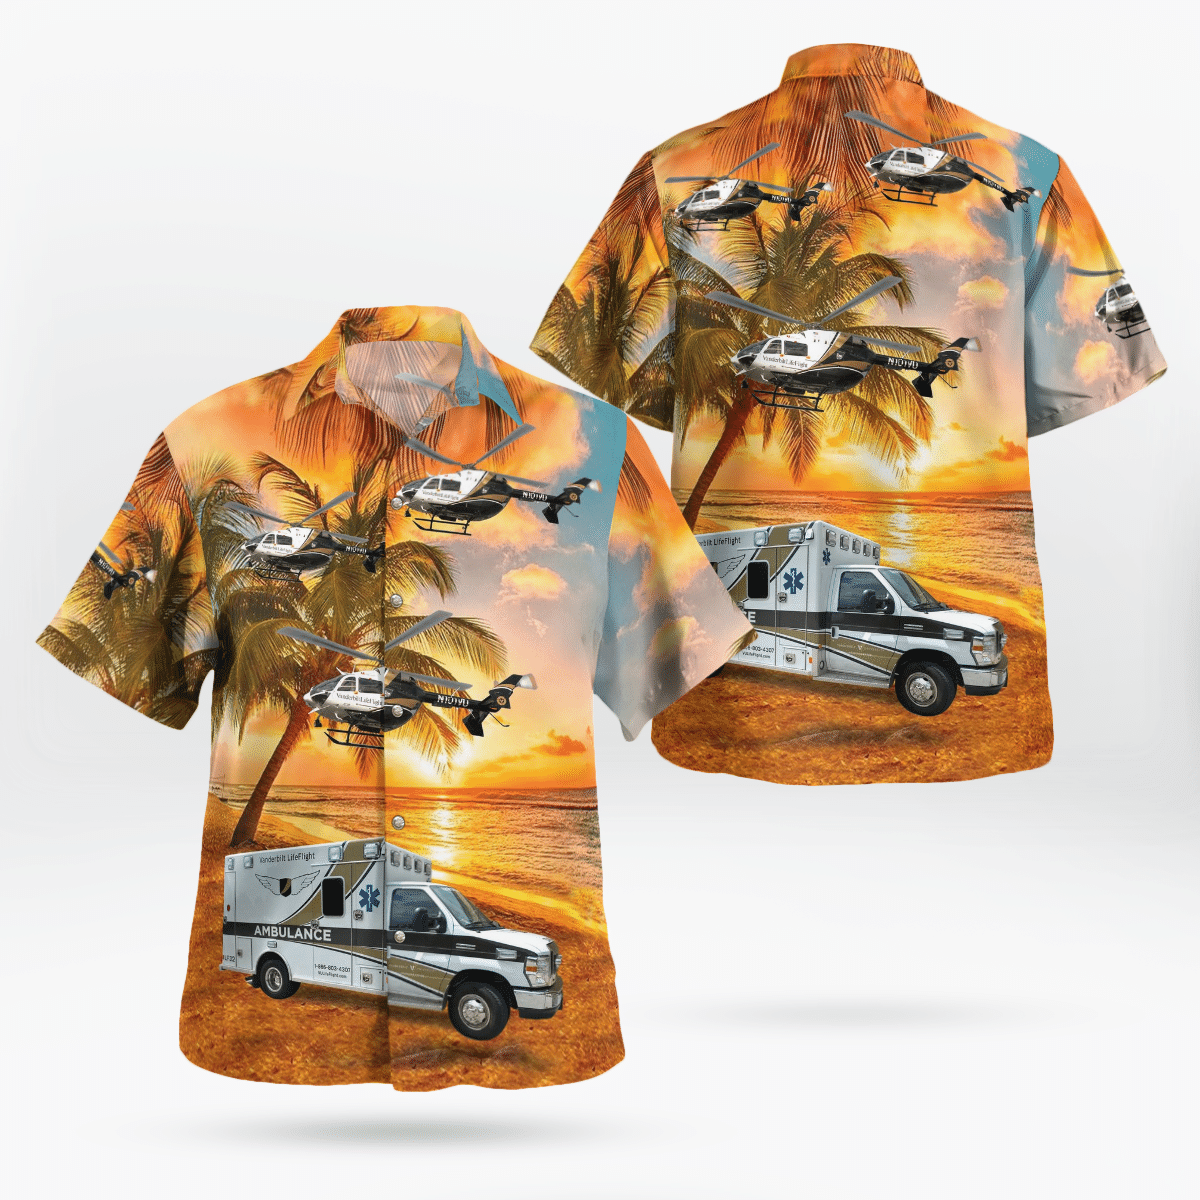 Why don't you order Hot Hawaiian Shirt today? 151